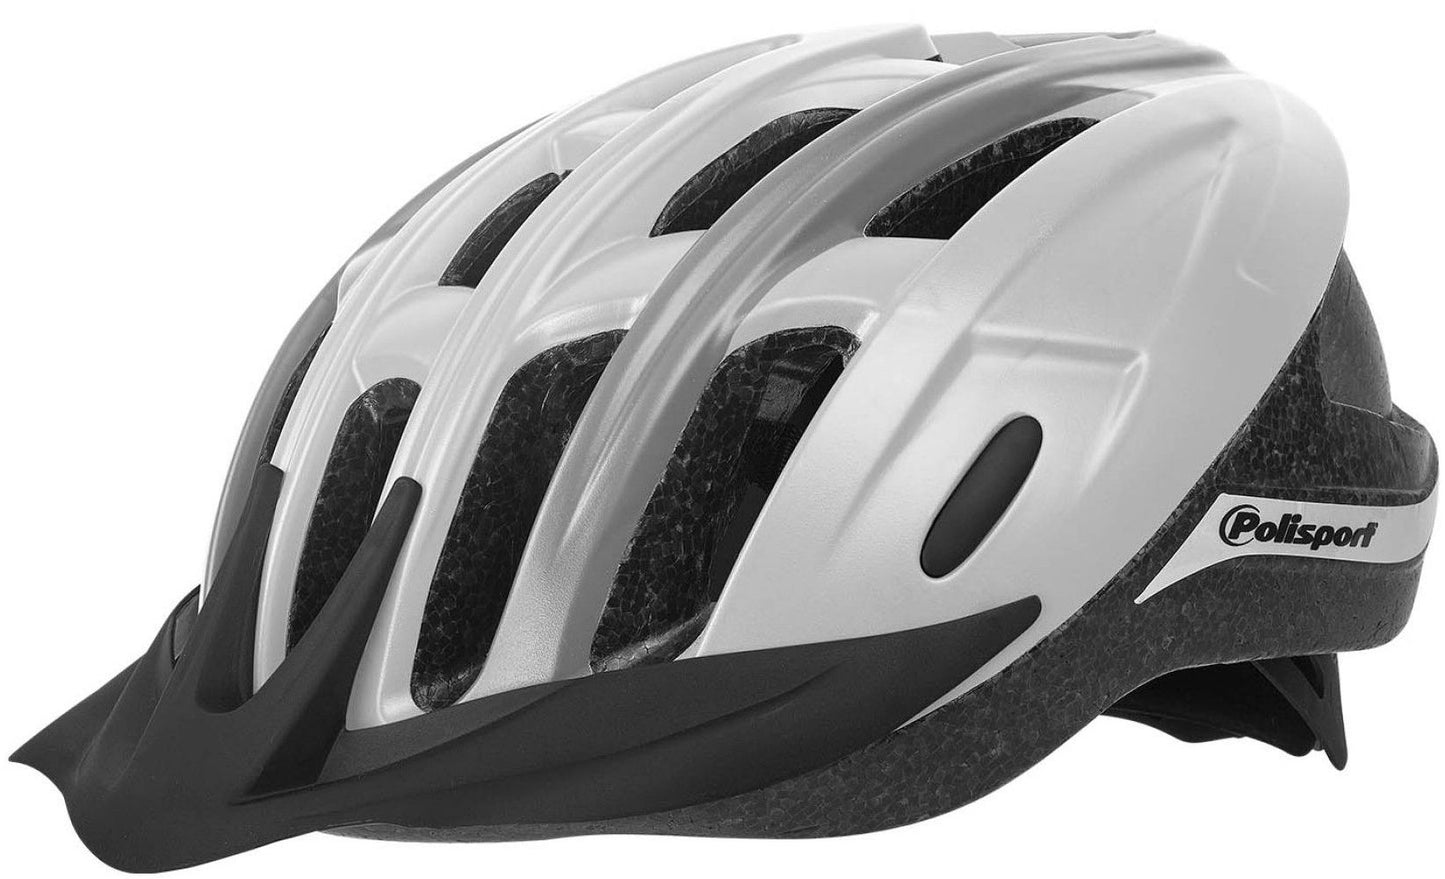 Polispgoudt Ride in Bicycle Helmet M 54-58 cm Gray White